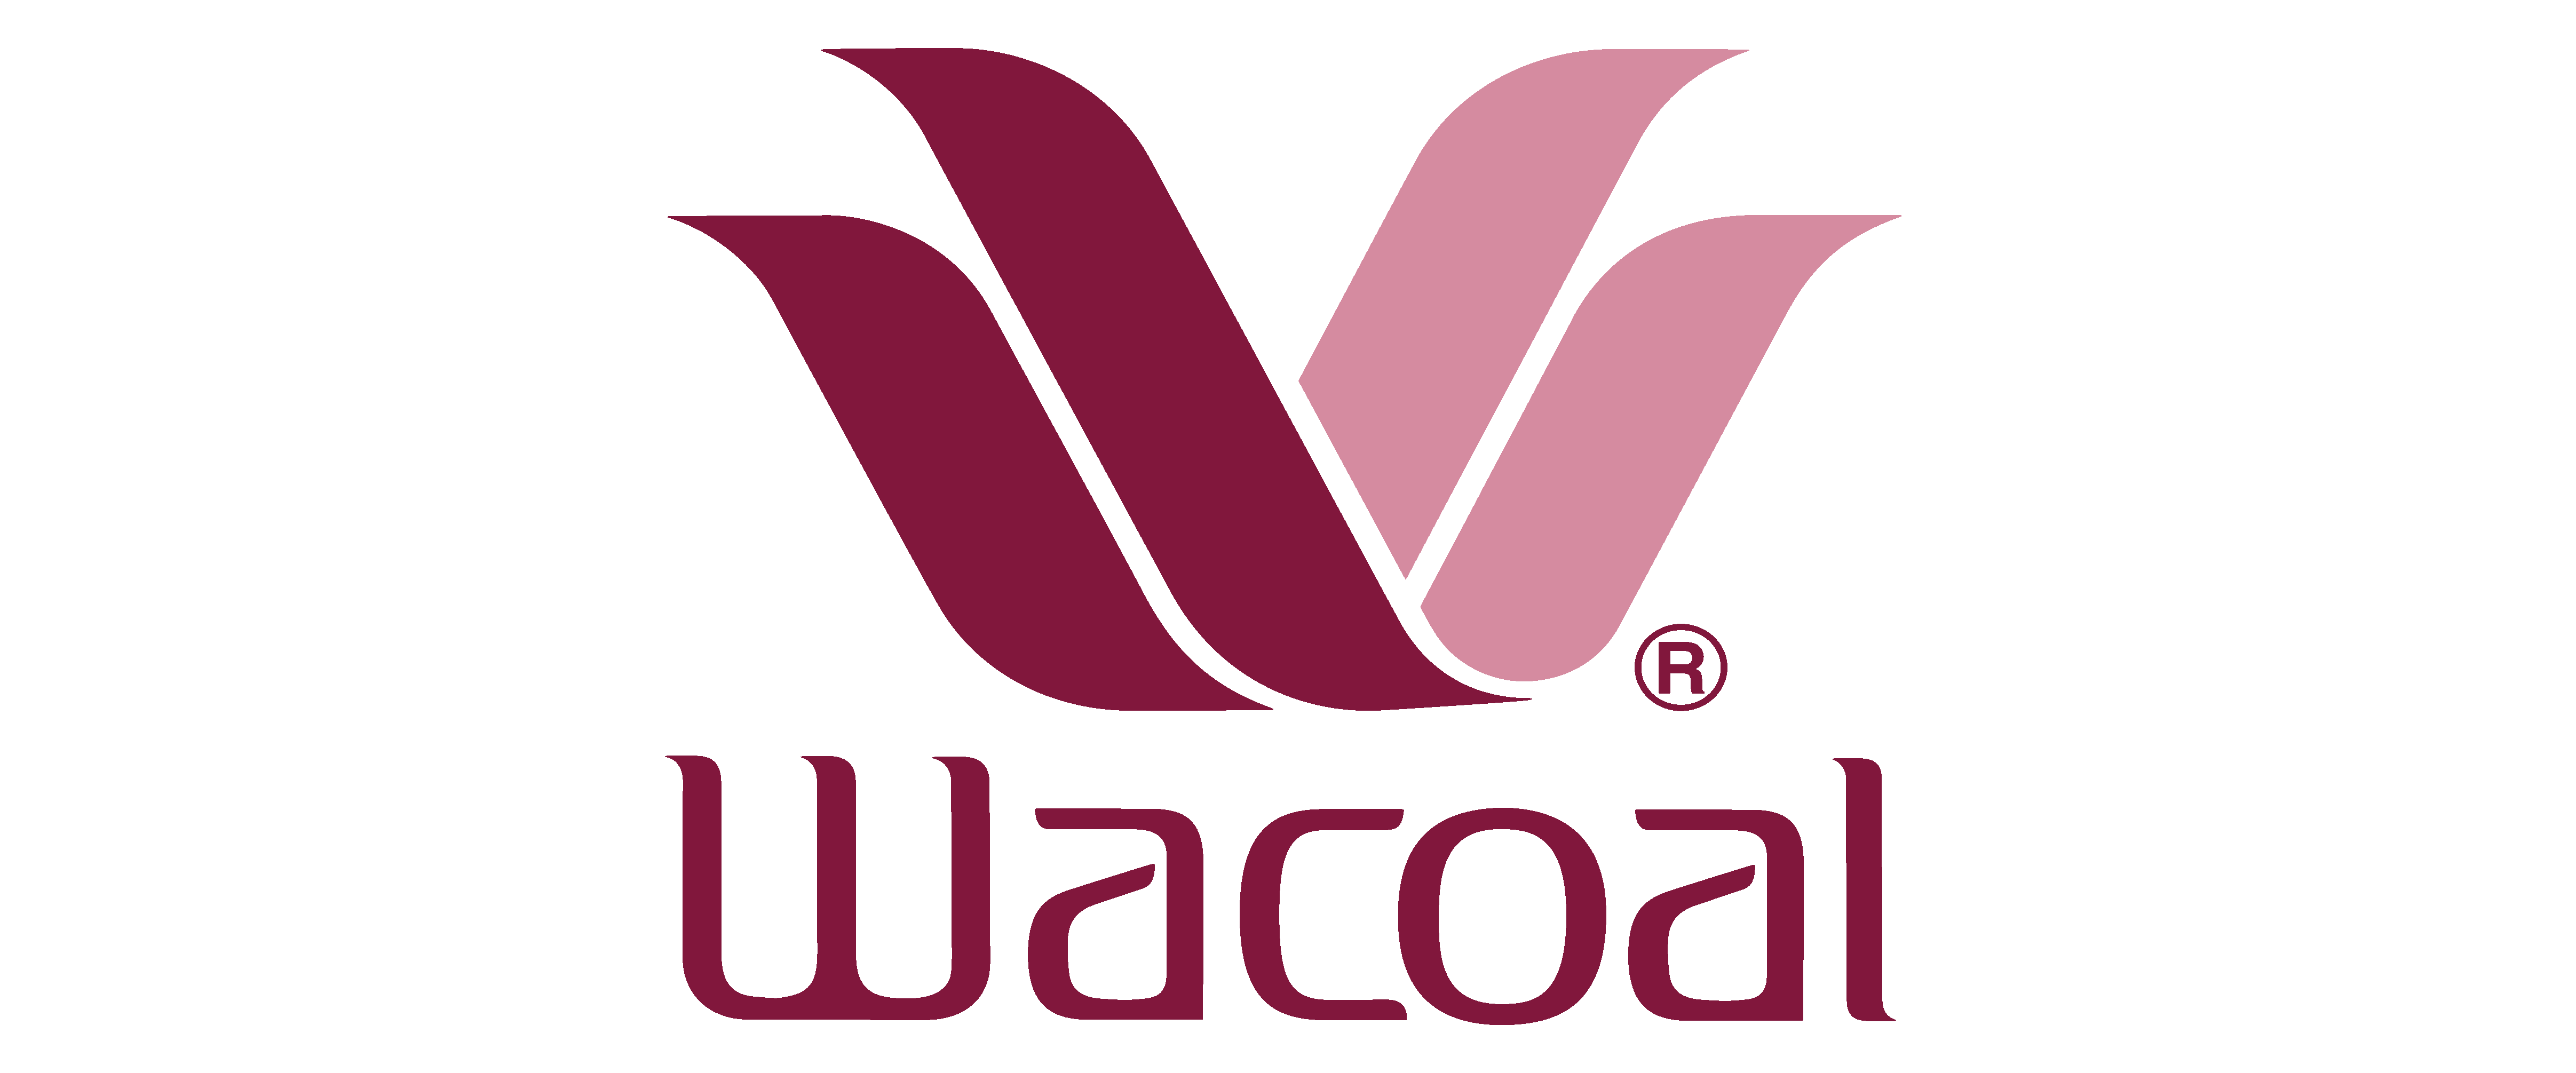 Wacoal Logo - Wacoal : The Soul of lingerie